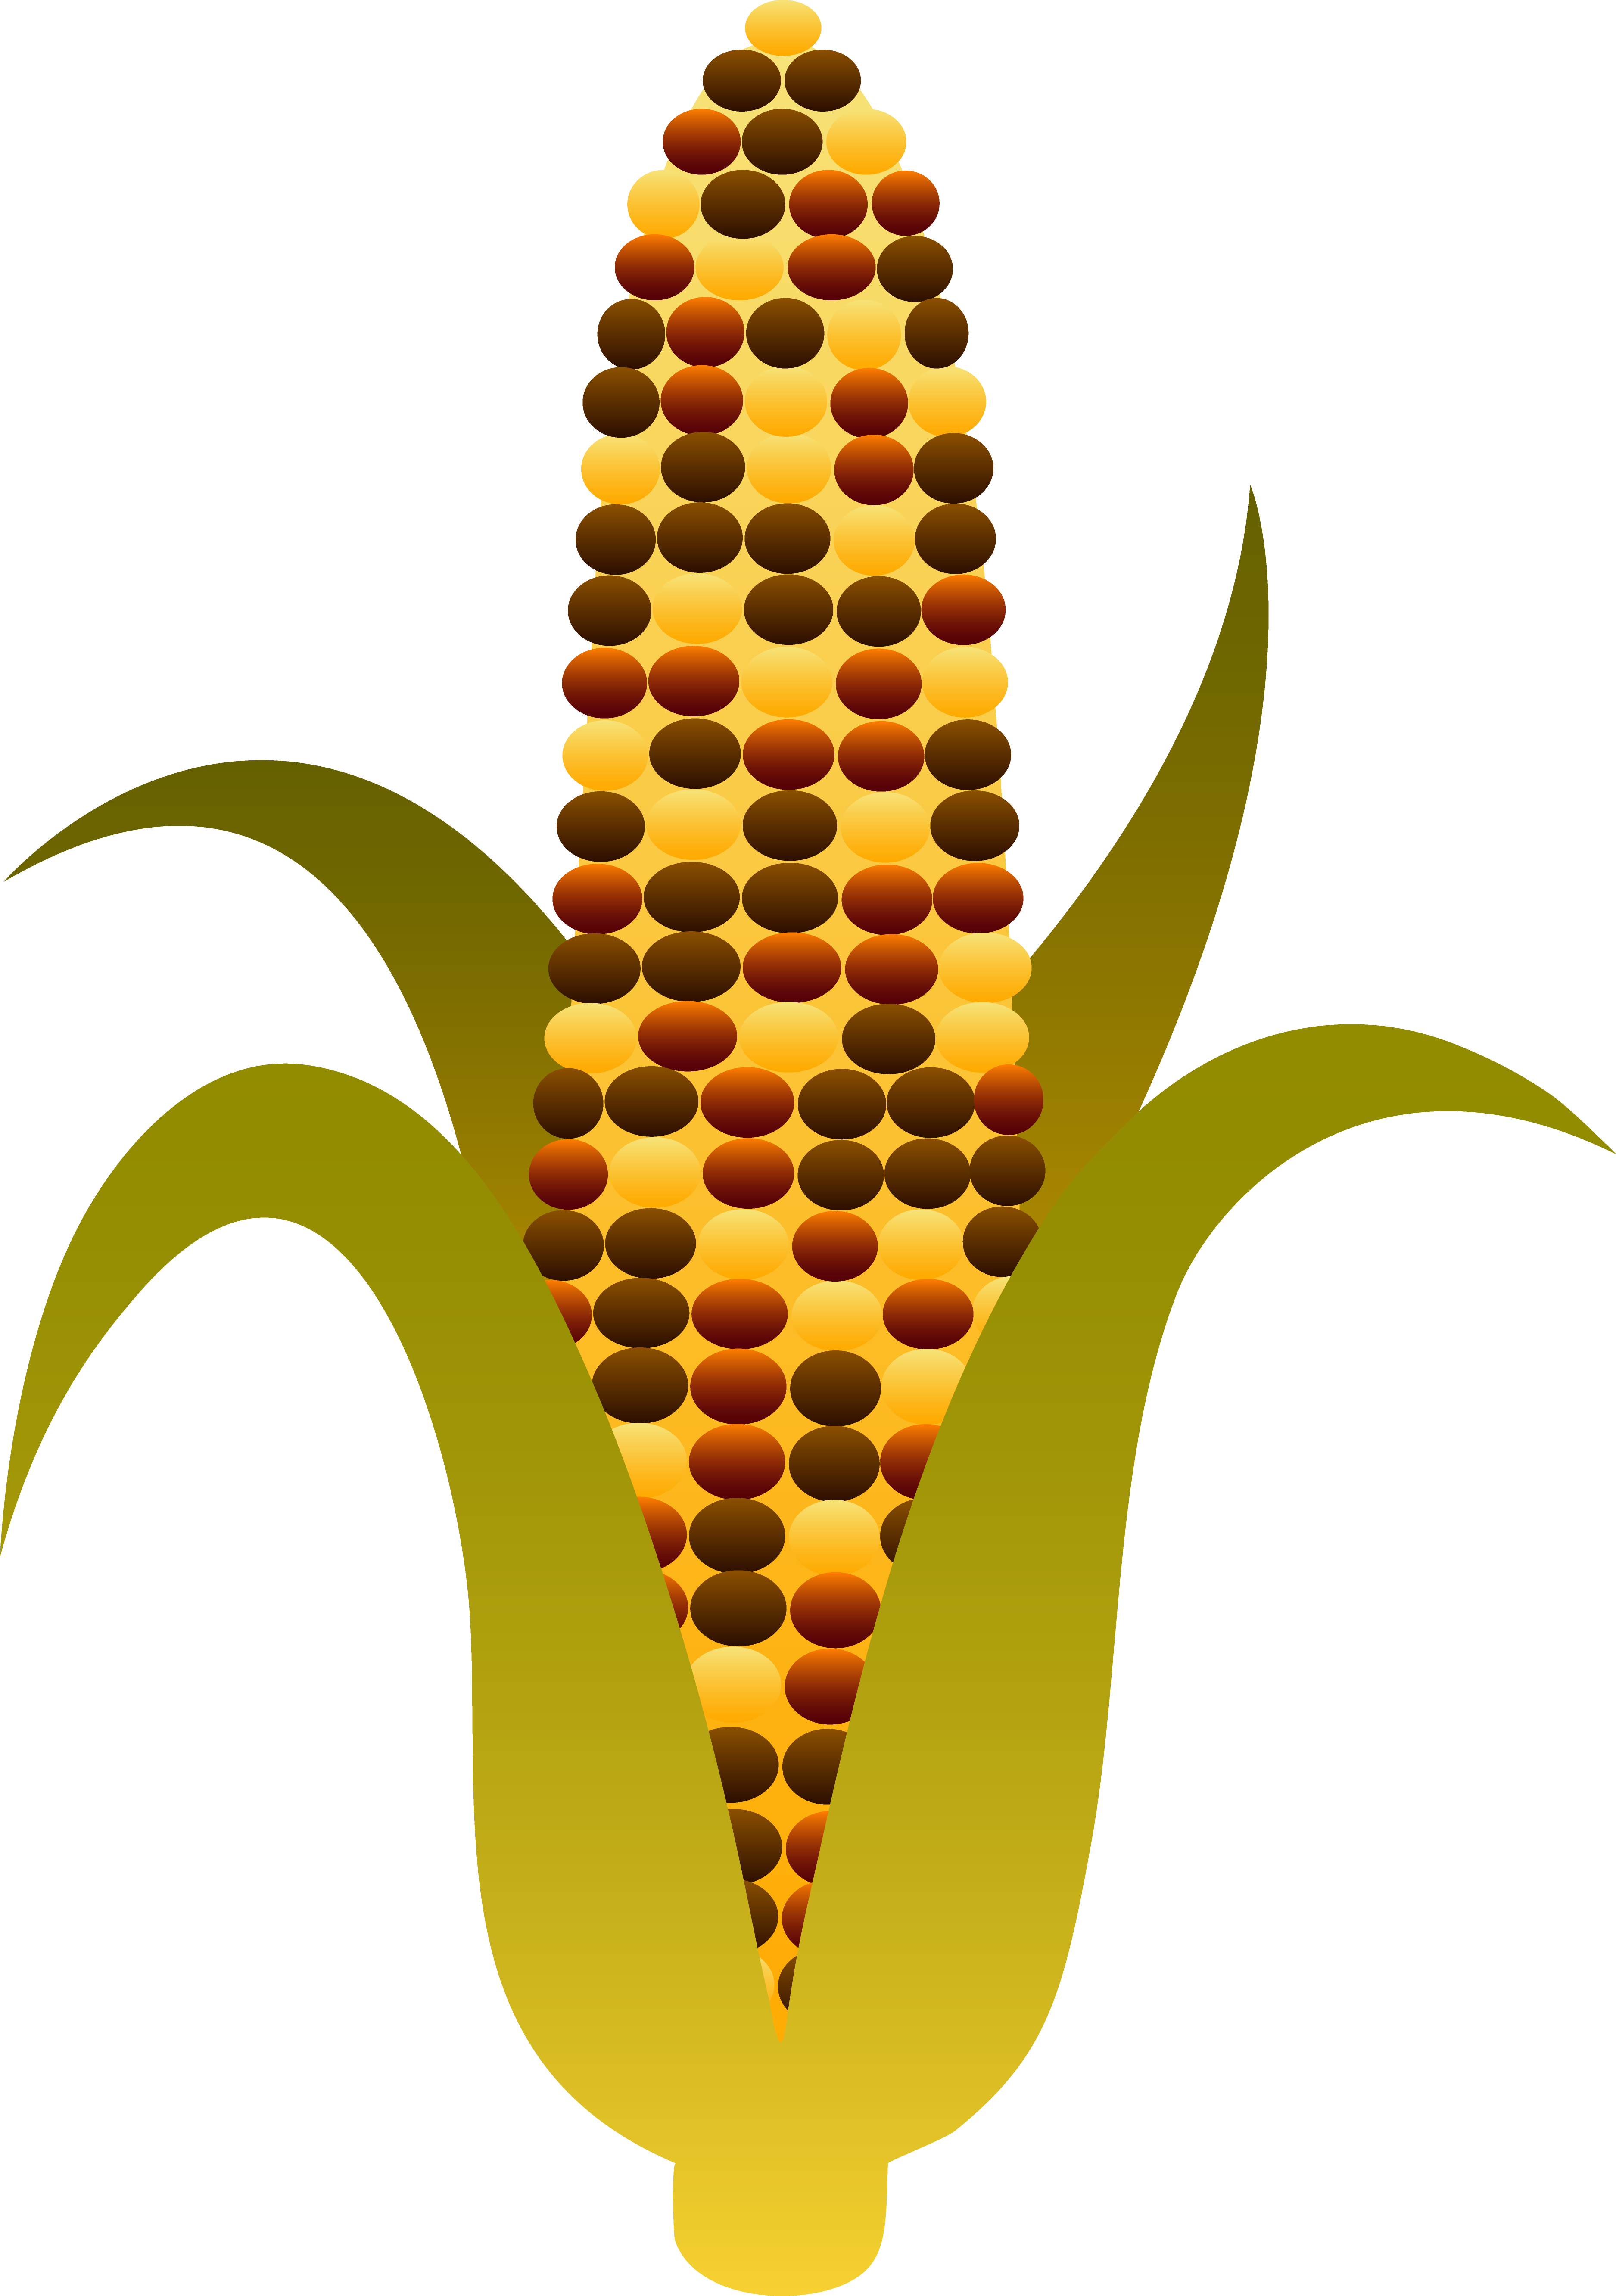 Clipart vegetables harvest festival. Indian corn maize free